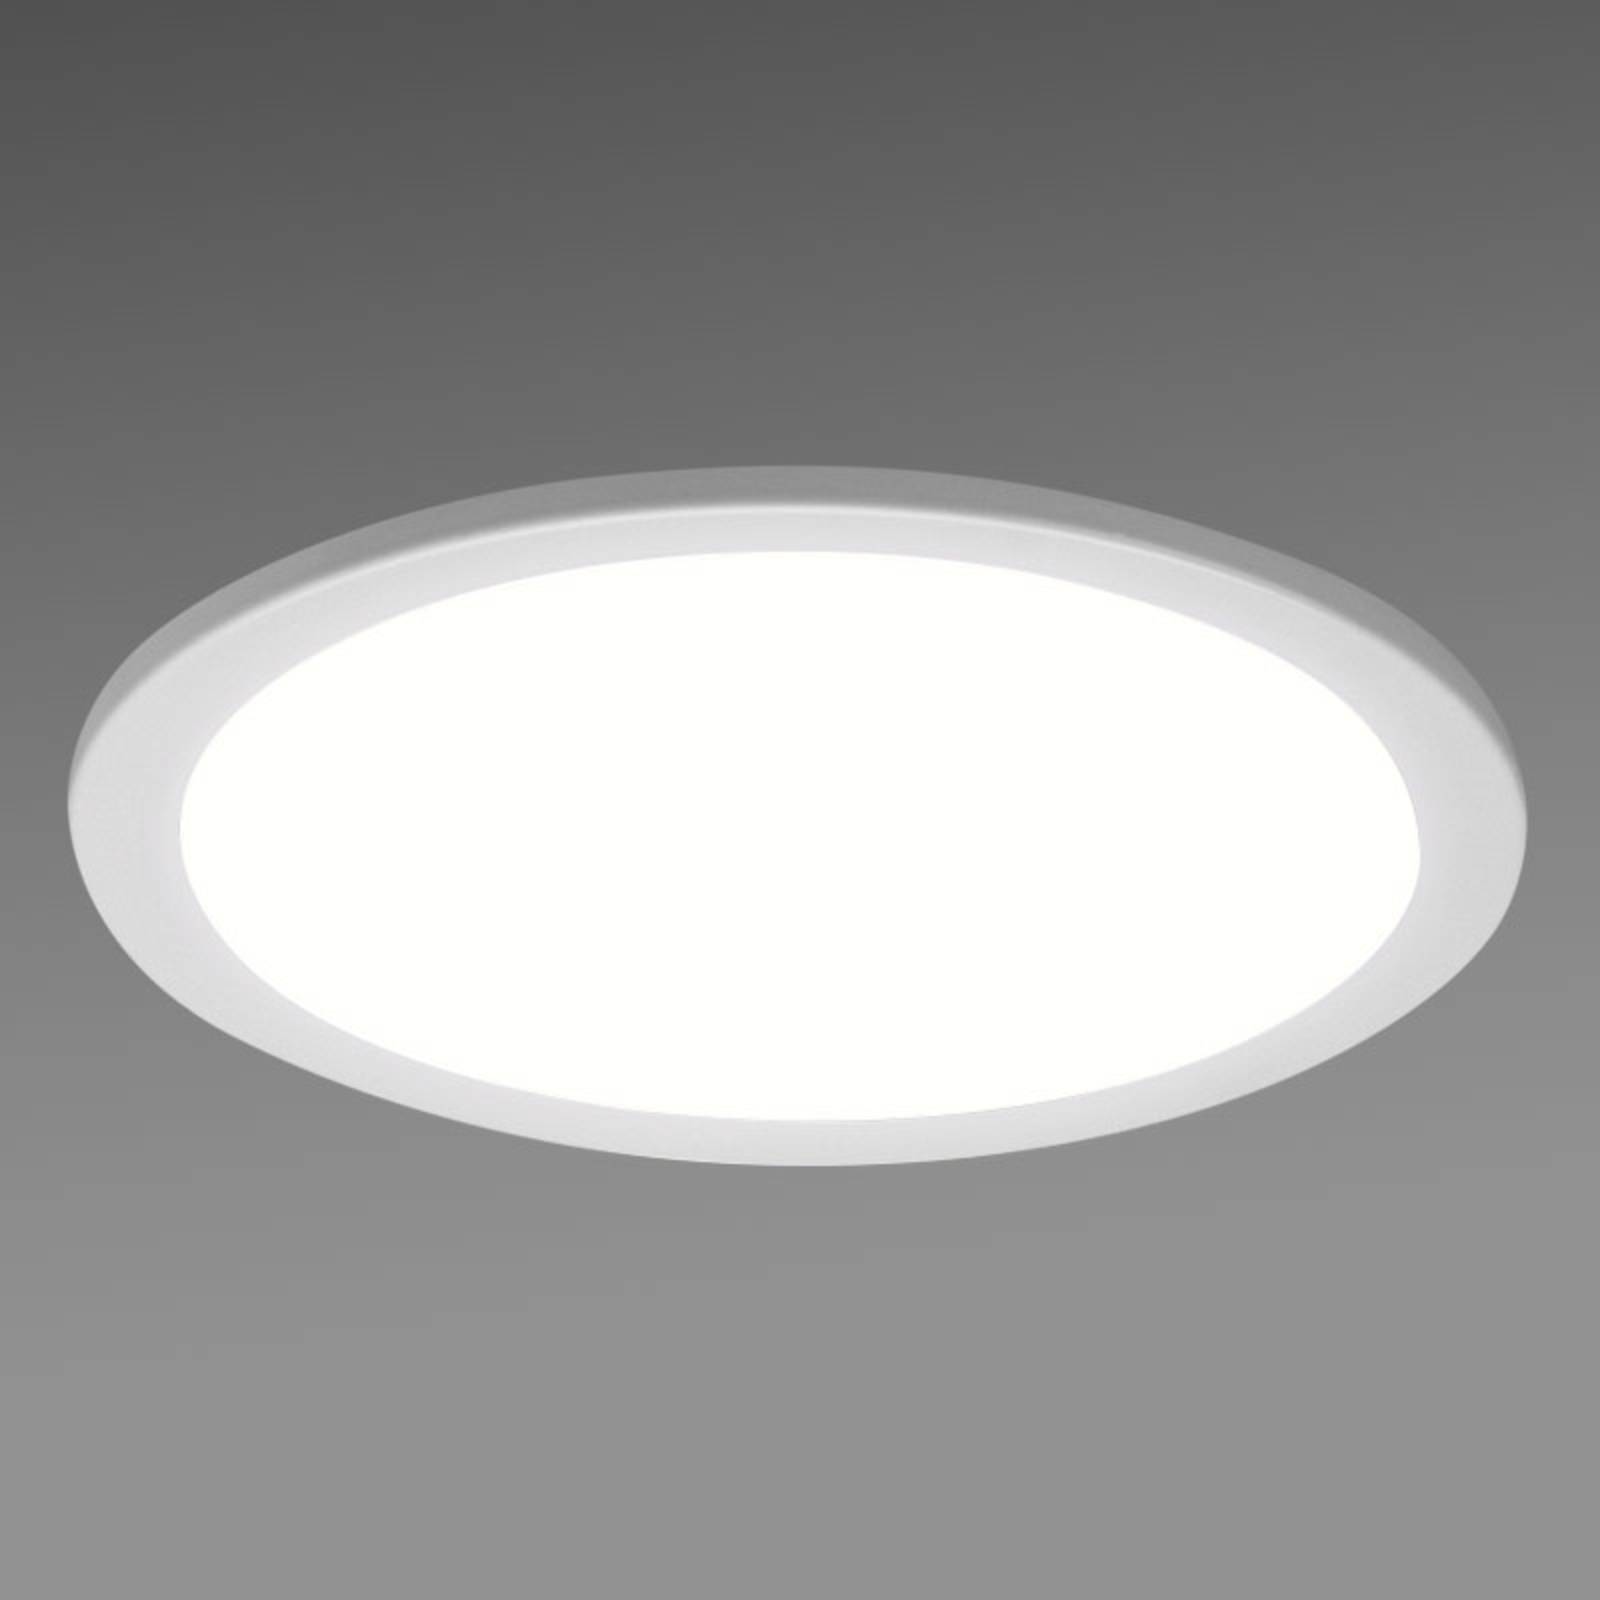 Image of Downlight encastrable LED SBLG rond, 4 000 K 